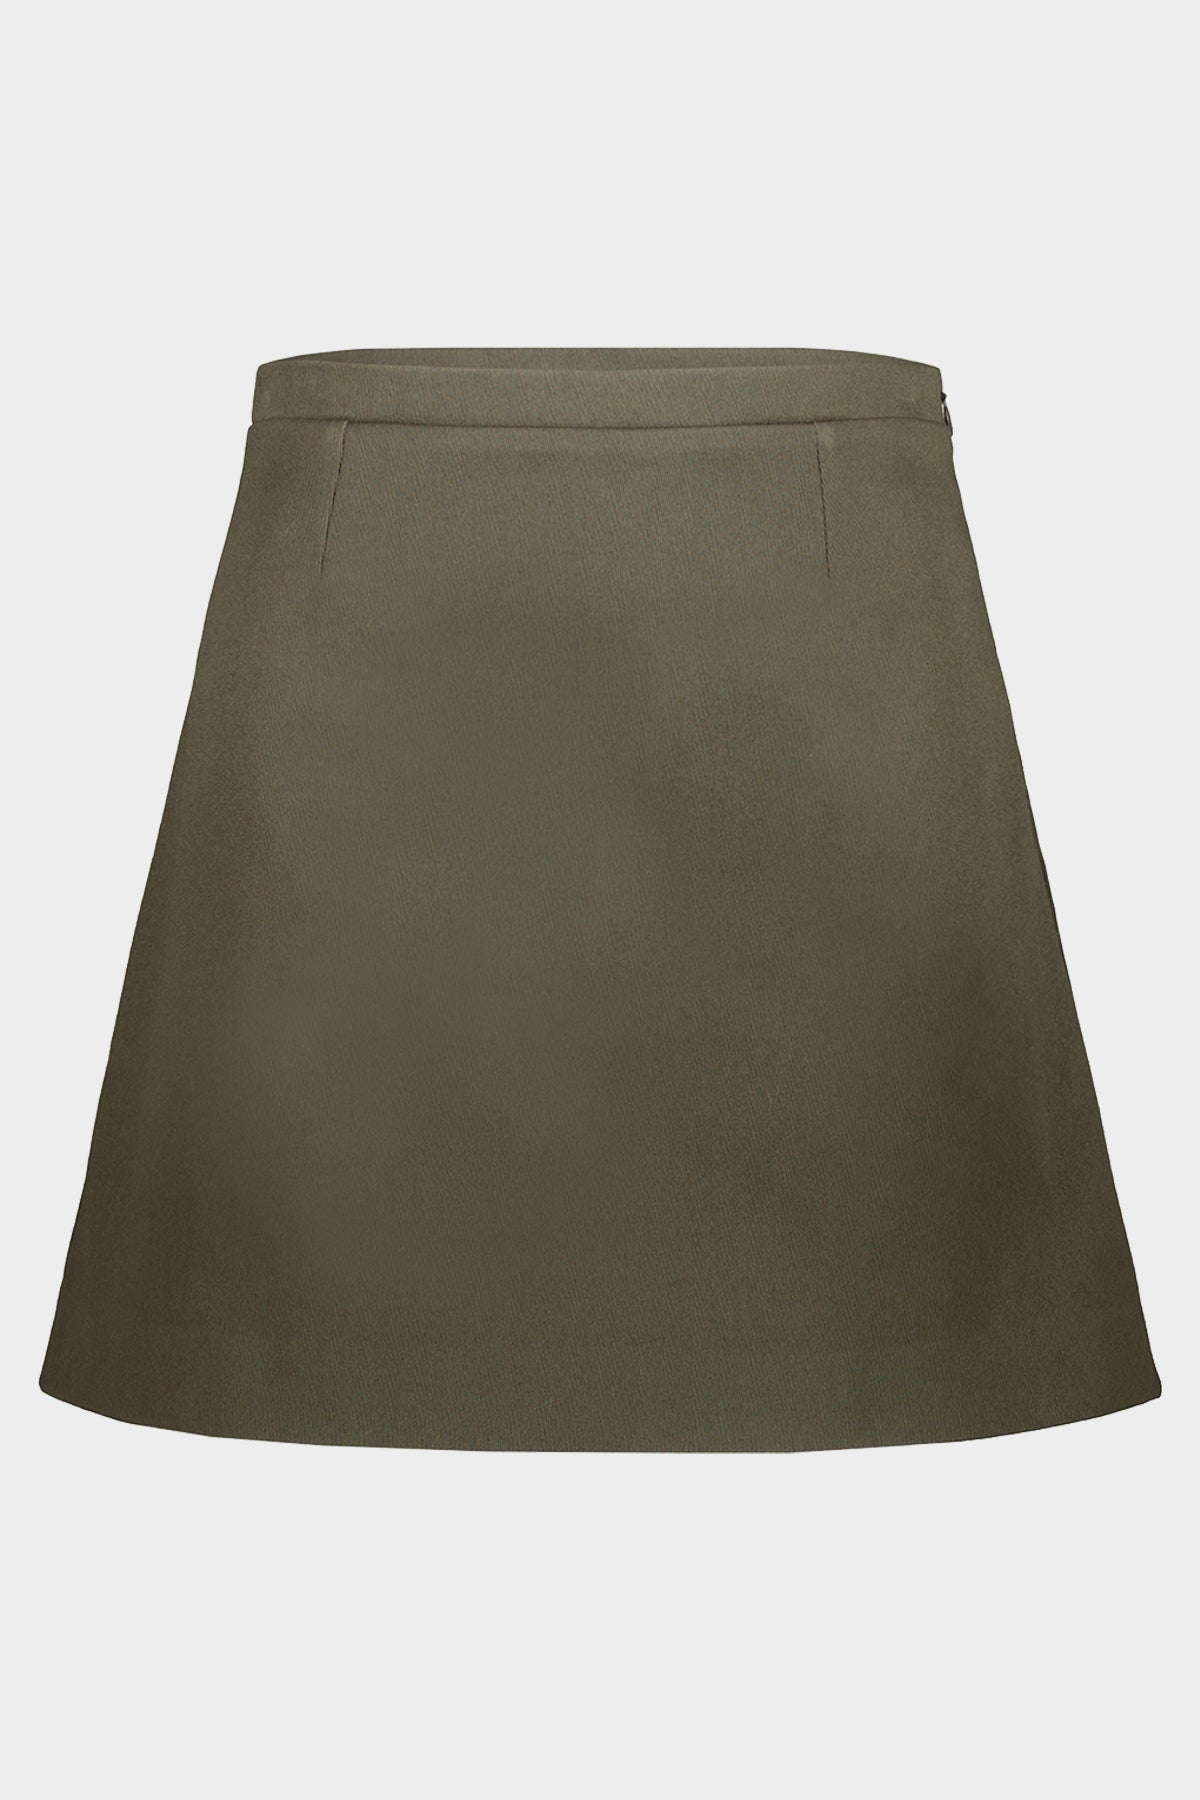 Baby Mini Skirt in Military Green - shop-olivia.com